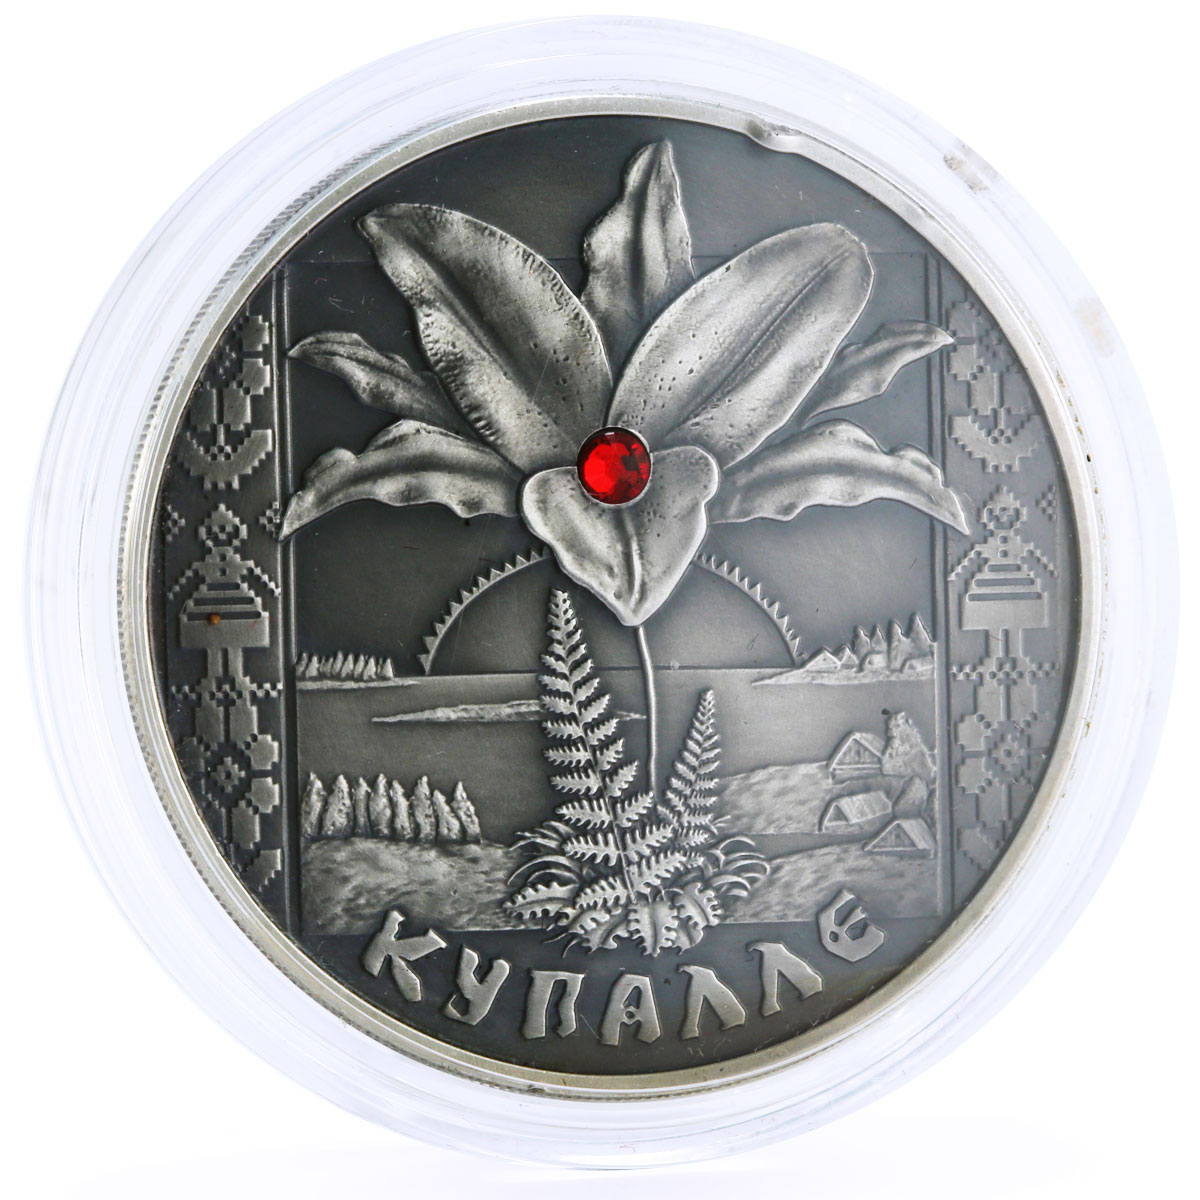 Belarus 20 rubles Belarusian Holiday Kupalle Flower silver coin 2004